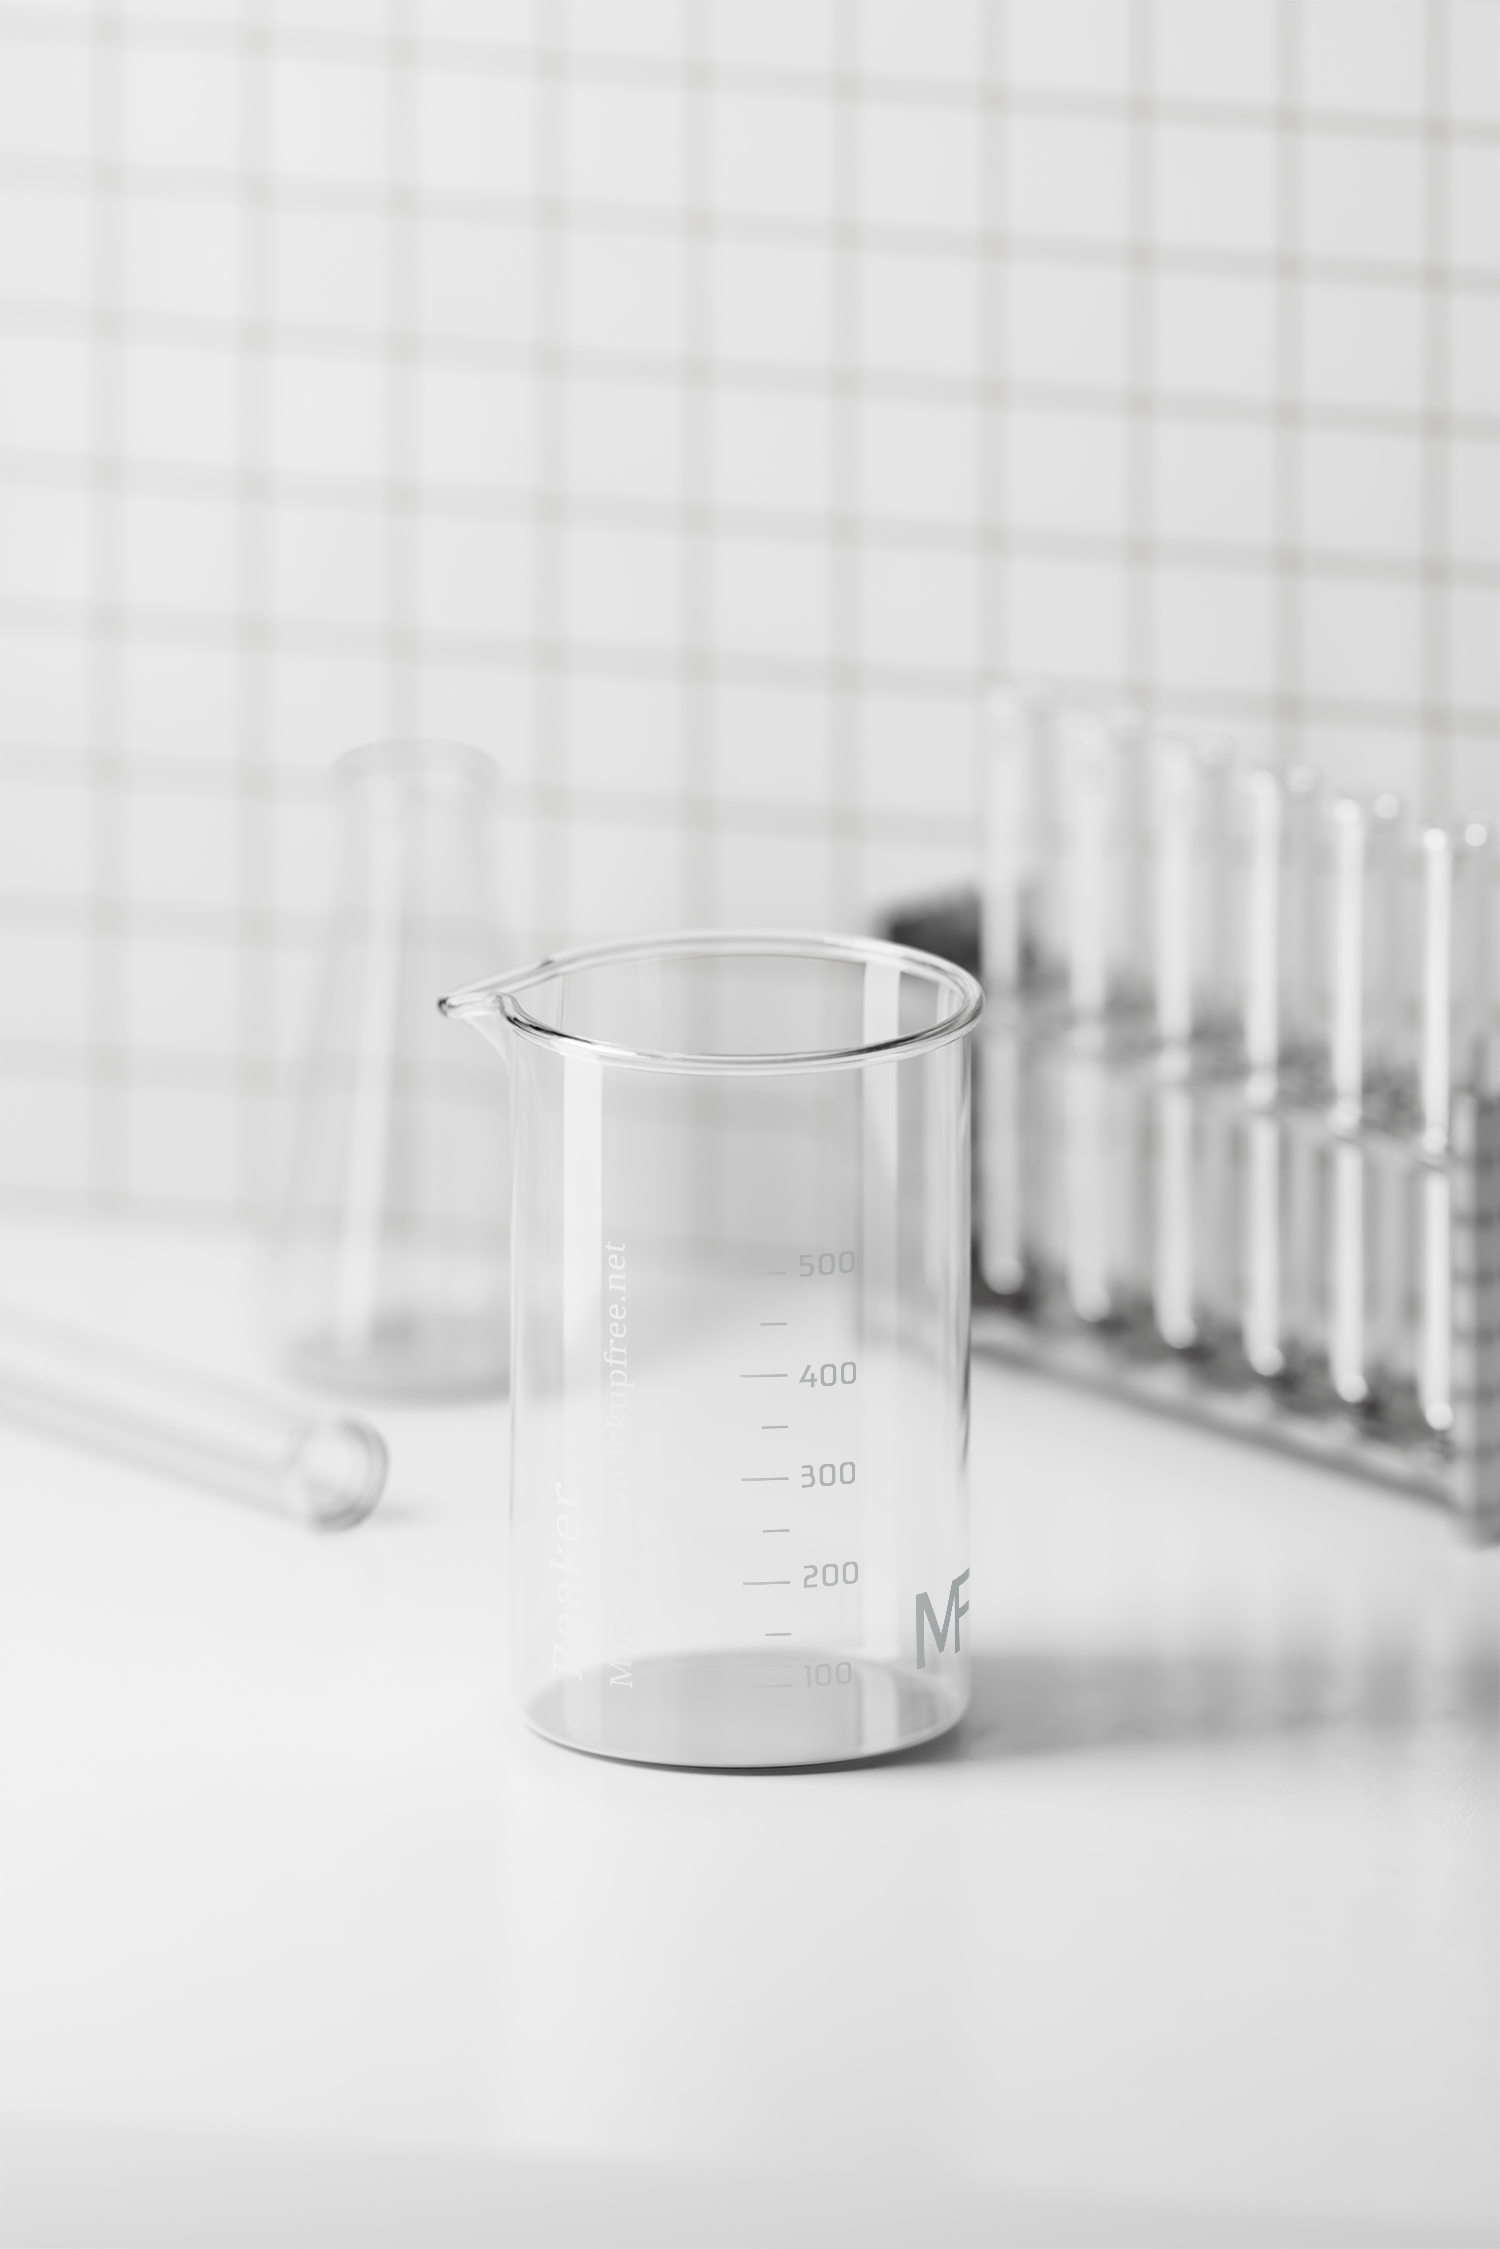 Beaker Free Mockups in a Laboratory Background